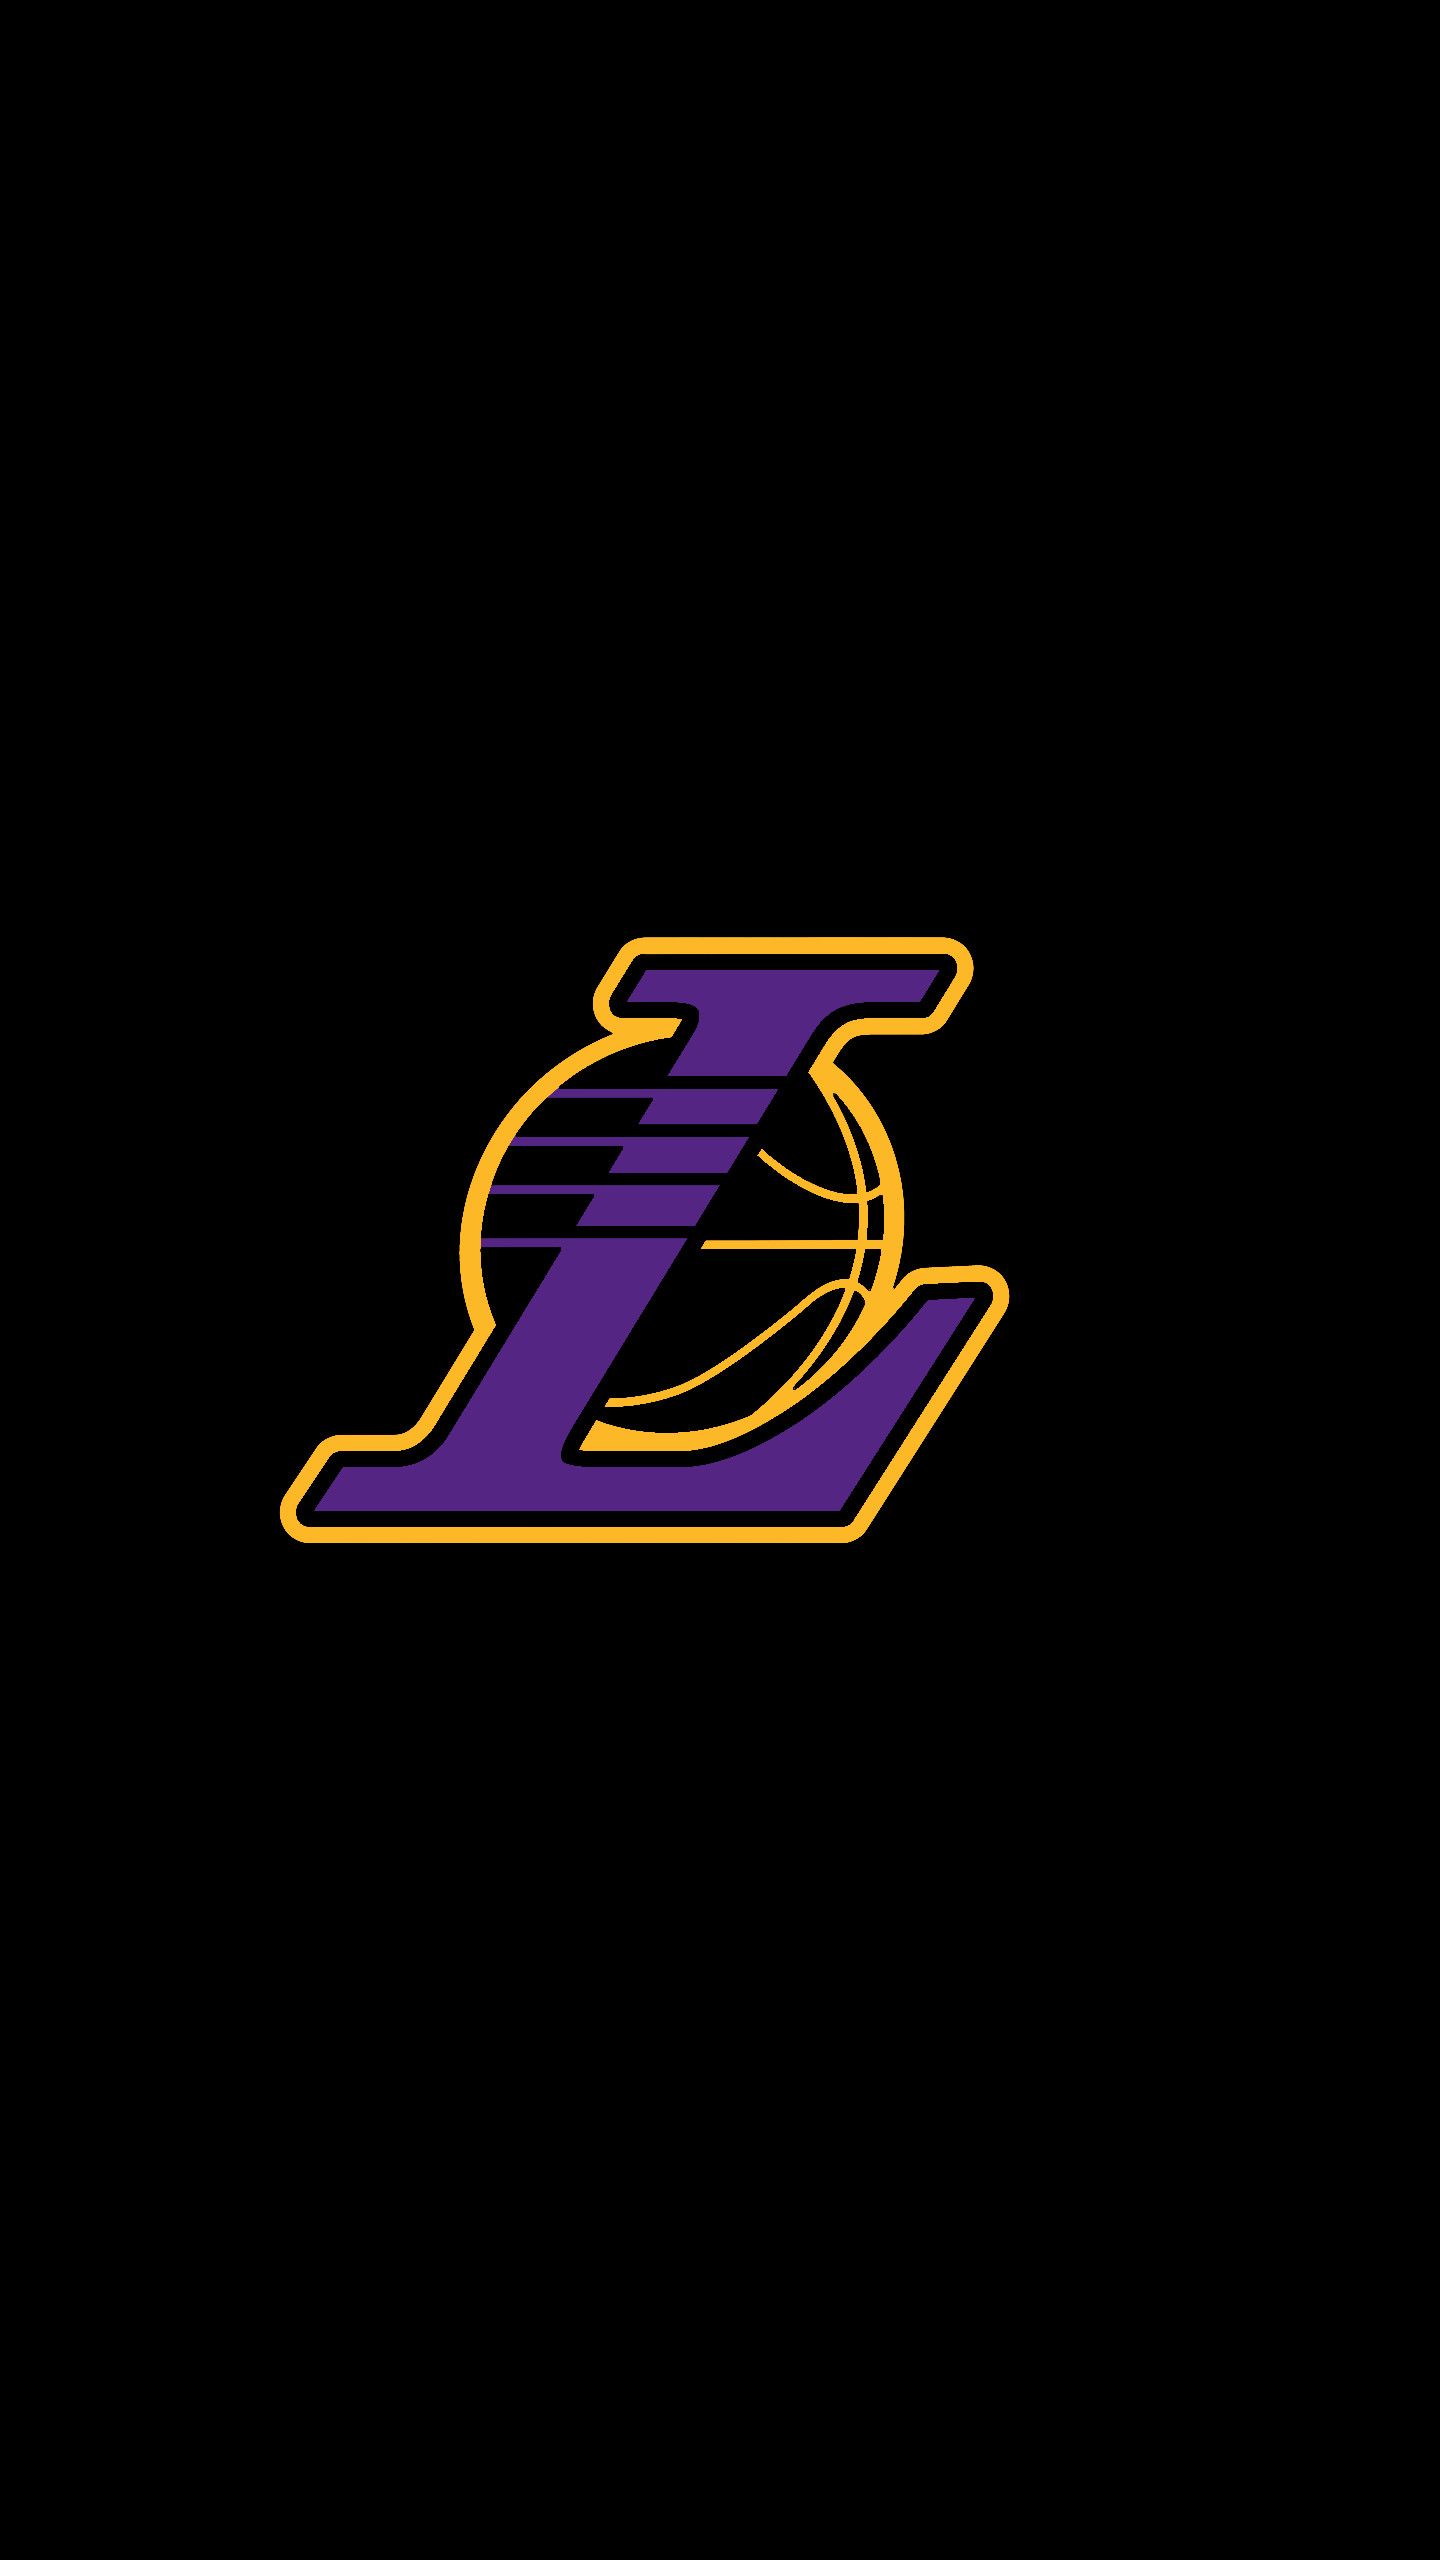 Los Angeles Lakers iPhone Wallpaper